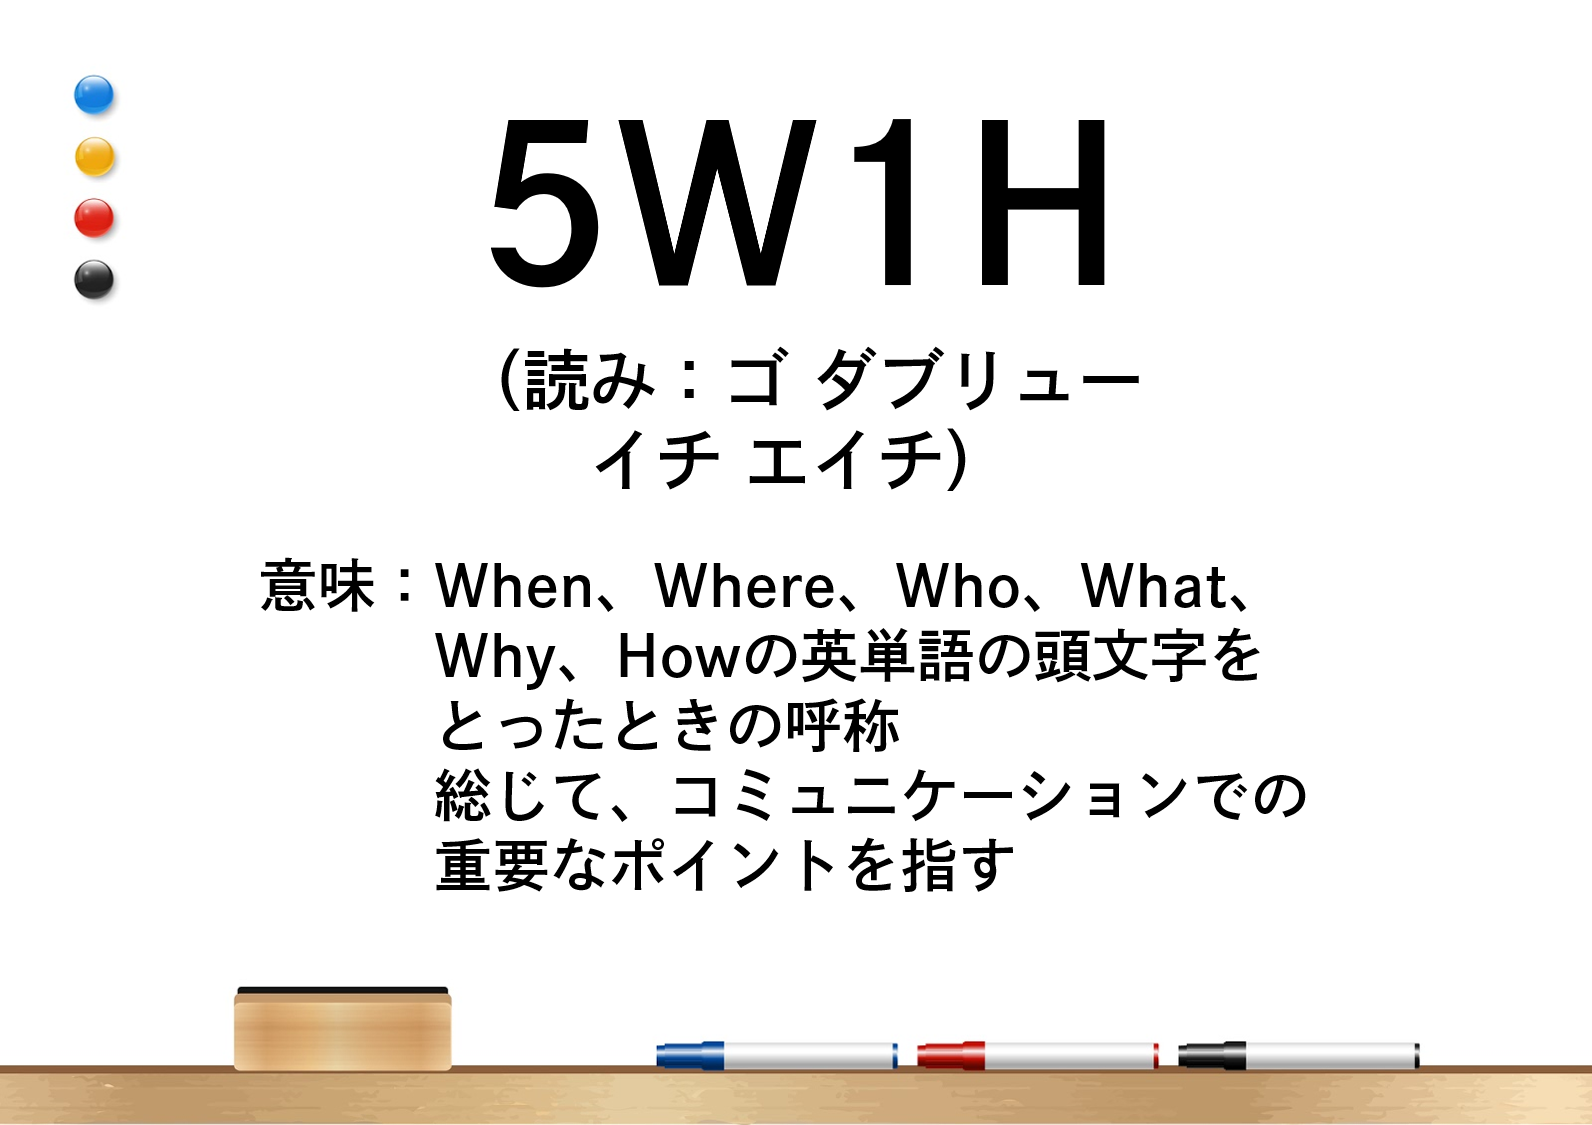 「5W1H」の意味や使い方は？例文でわかりやすく解説！